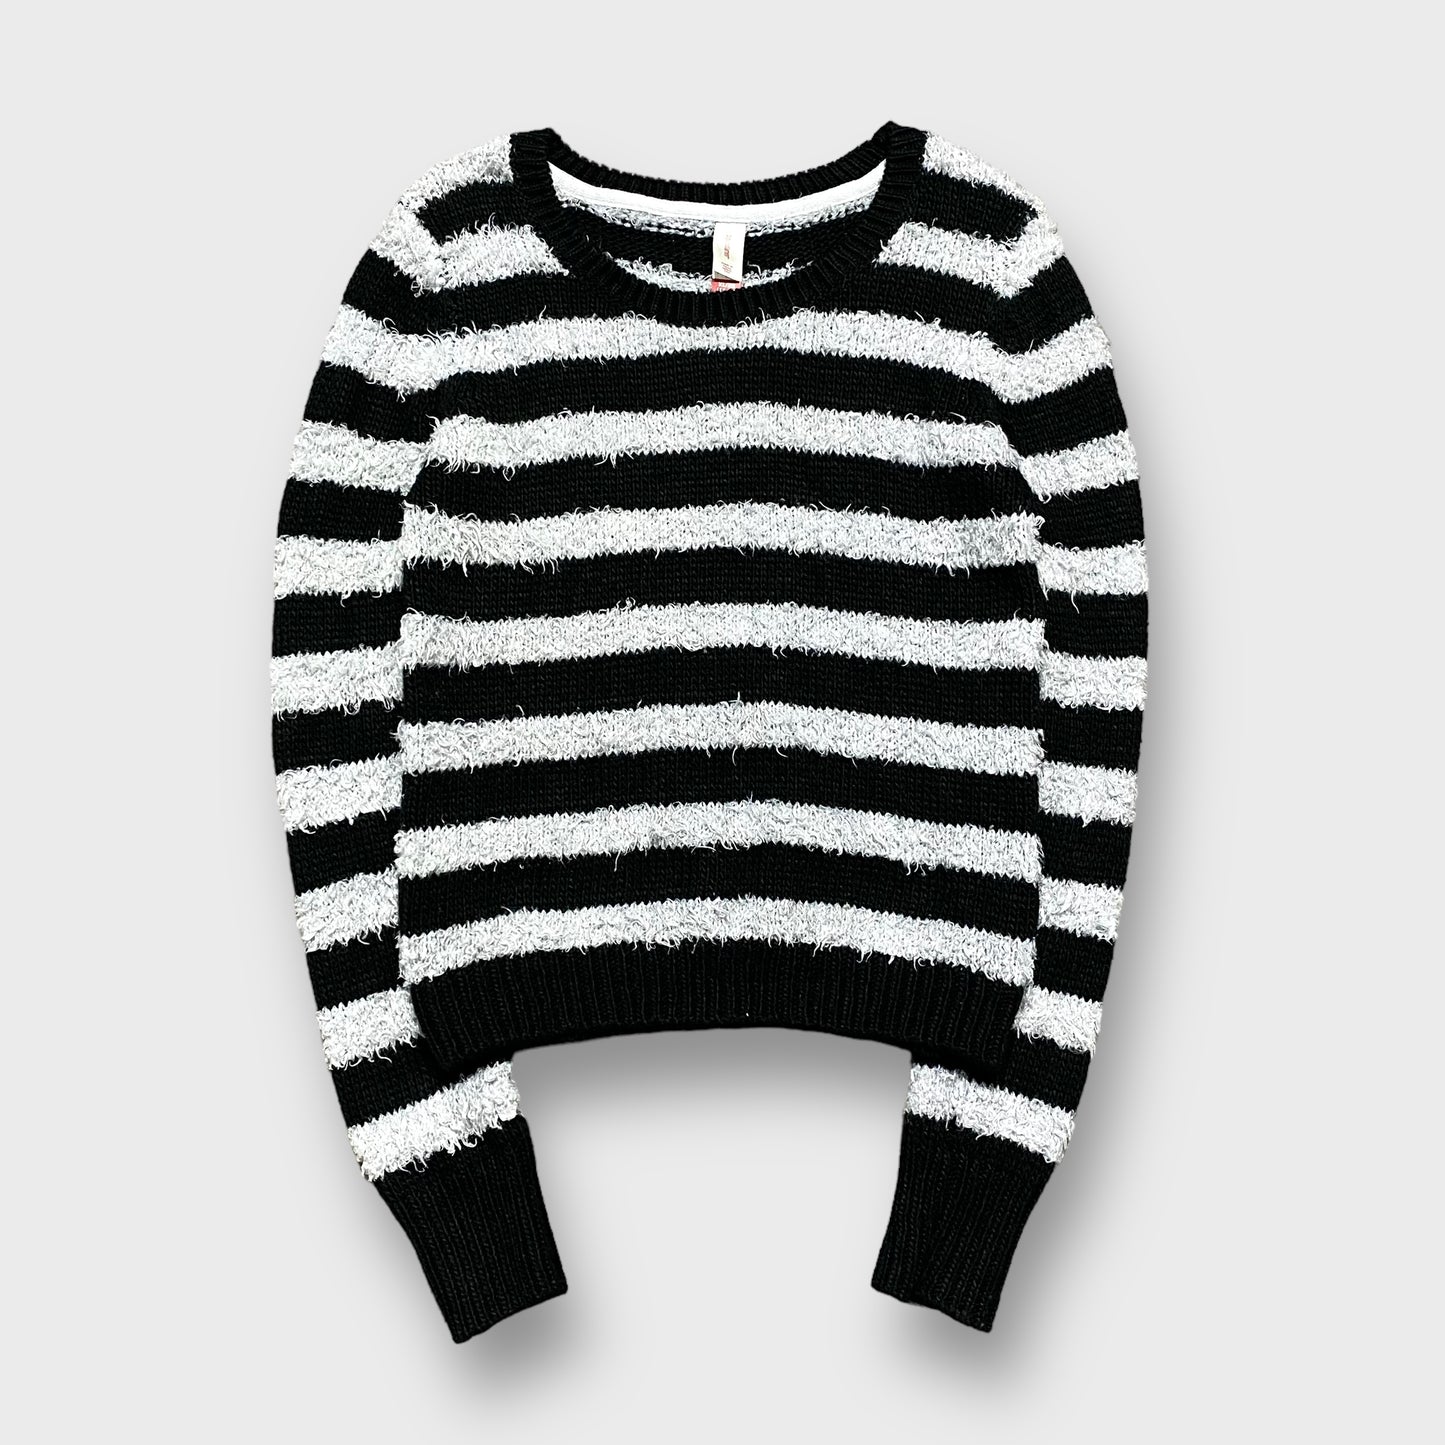 Border pattern shaggy knit sweater